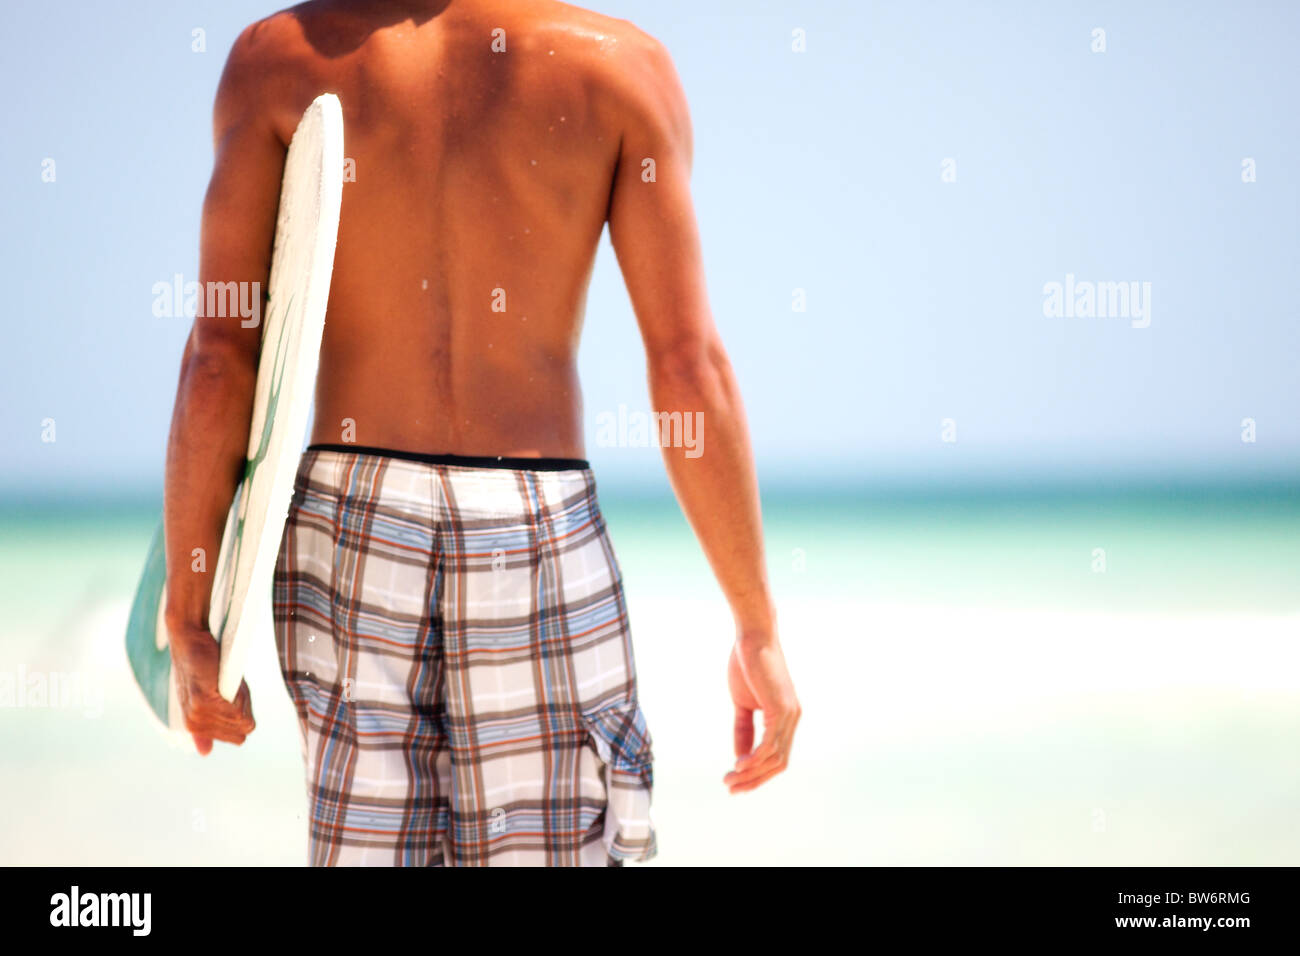 Young man carrying a skim board walking on a beach. Panama City Beach, Gulf Coast, Florida. Stock Photo